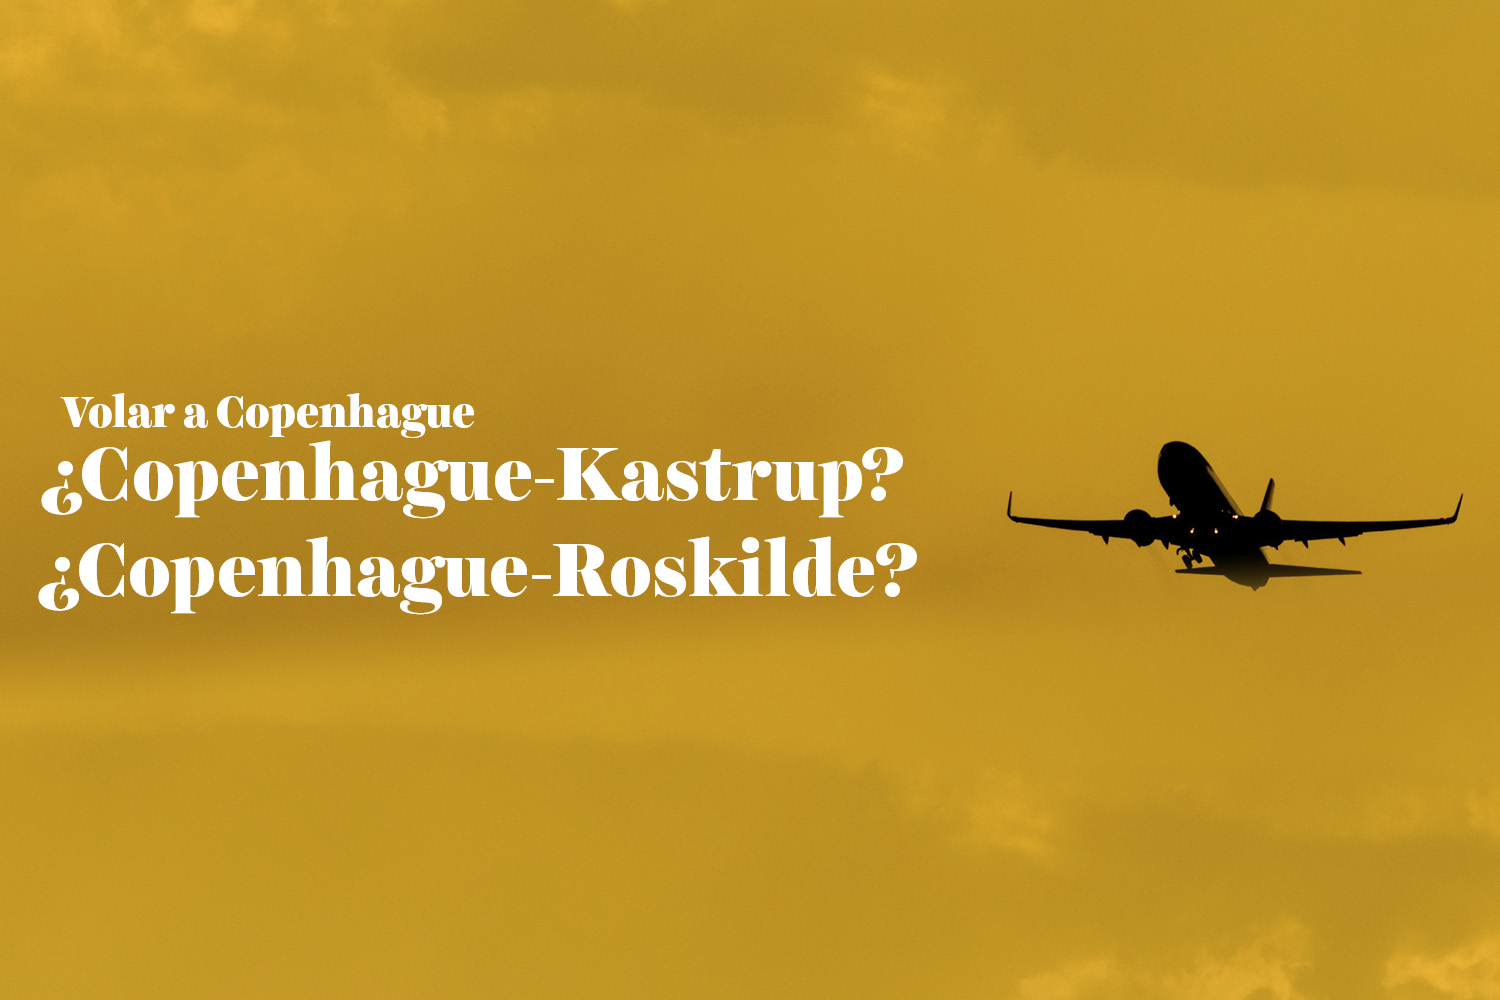 Aeropuerto Copenhague: ¿Volar a Copenhague-Kastrup o Copenhague-Roskild?